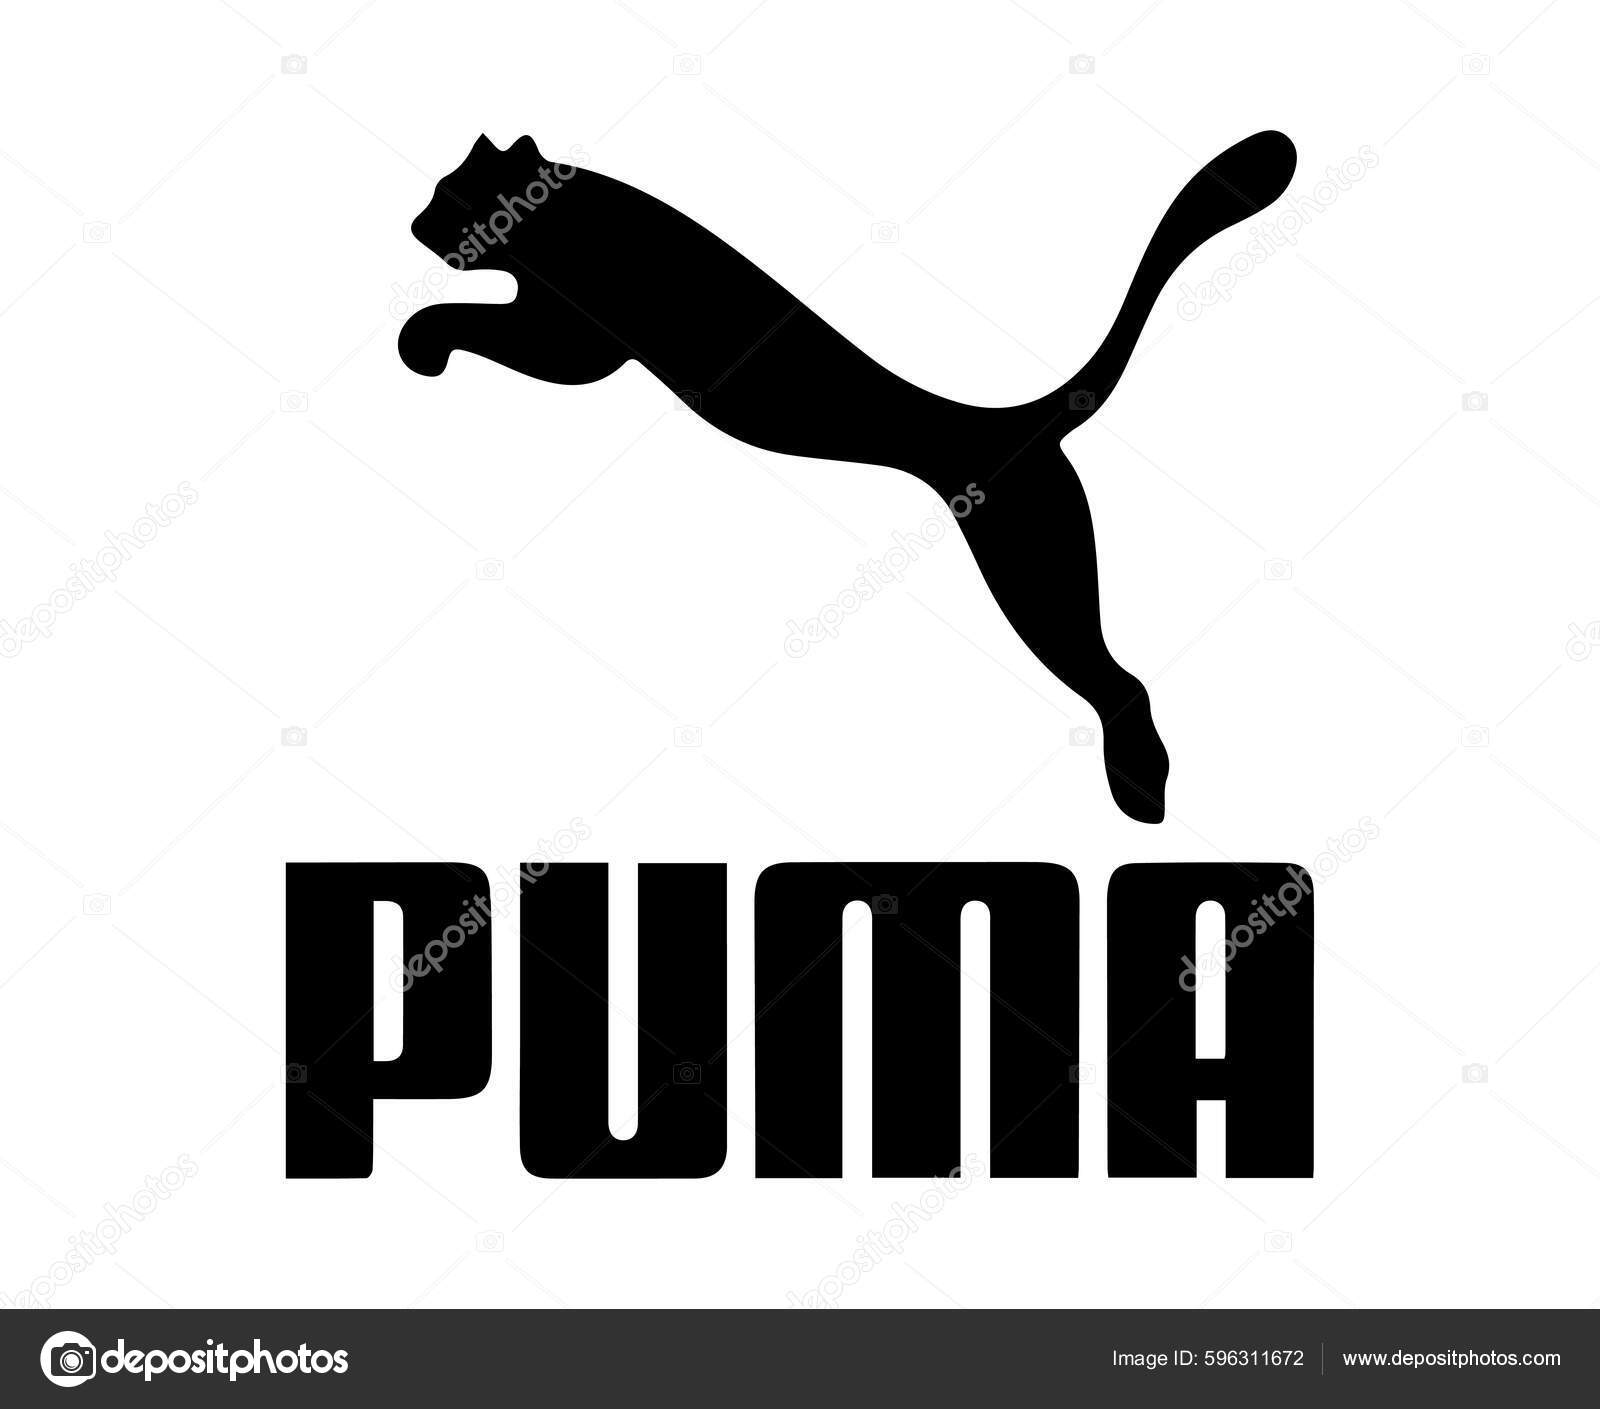 limpiar Mutuo Contribuyente Puma logo imágenes de stock de arte vectorial | Depositphotos